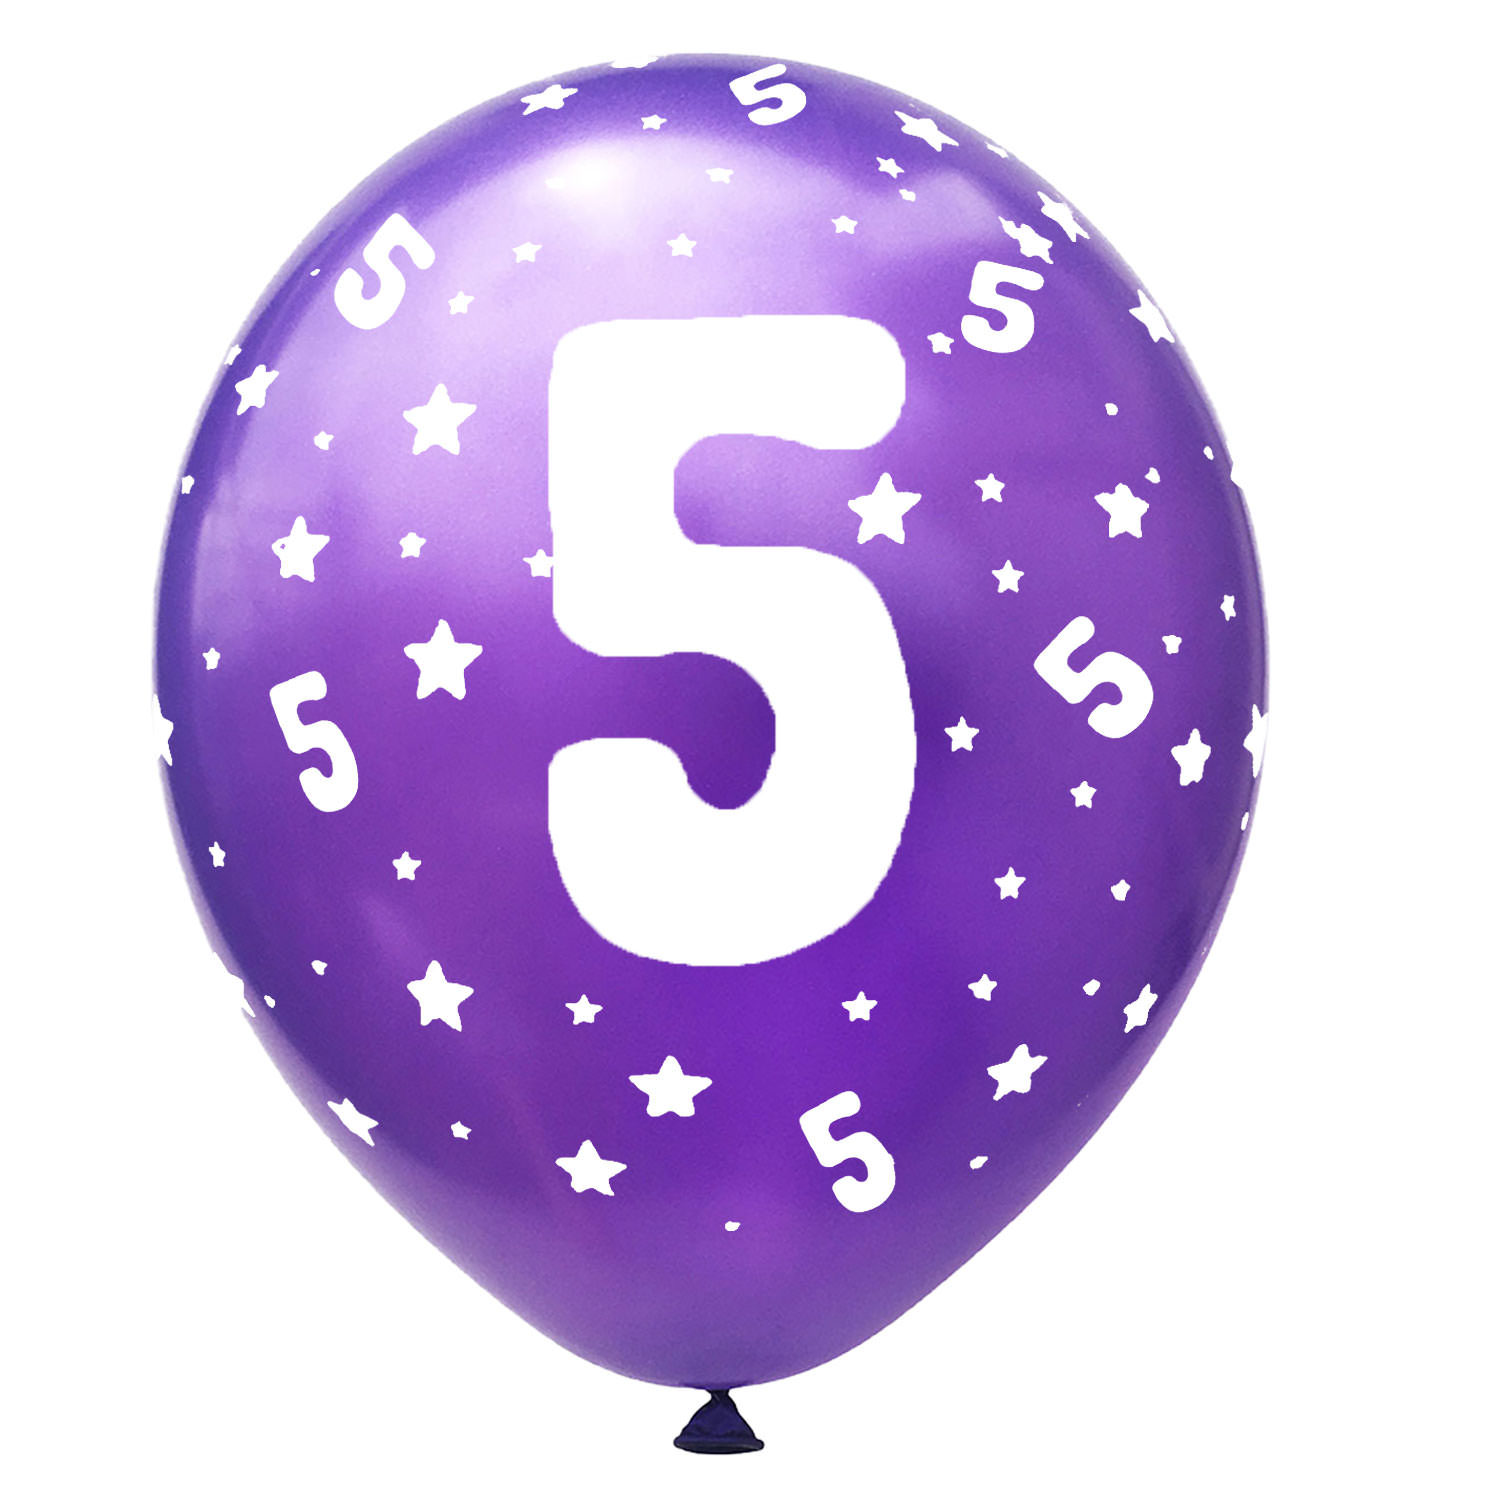 Zahl wählbar Nr 8 Oblique Unique® Folien Luftballon mit Zahl Nummer 0-9 Folienballon für Kinder Geburtstag Jubiläum Silvester Party Deko Ballon Grün